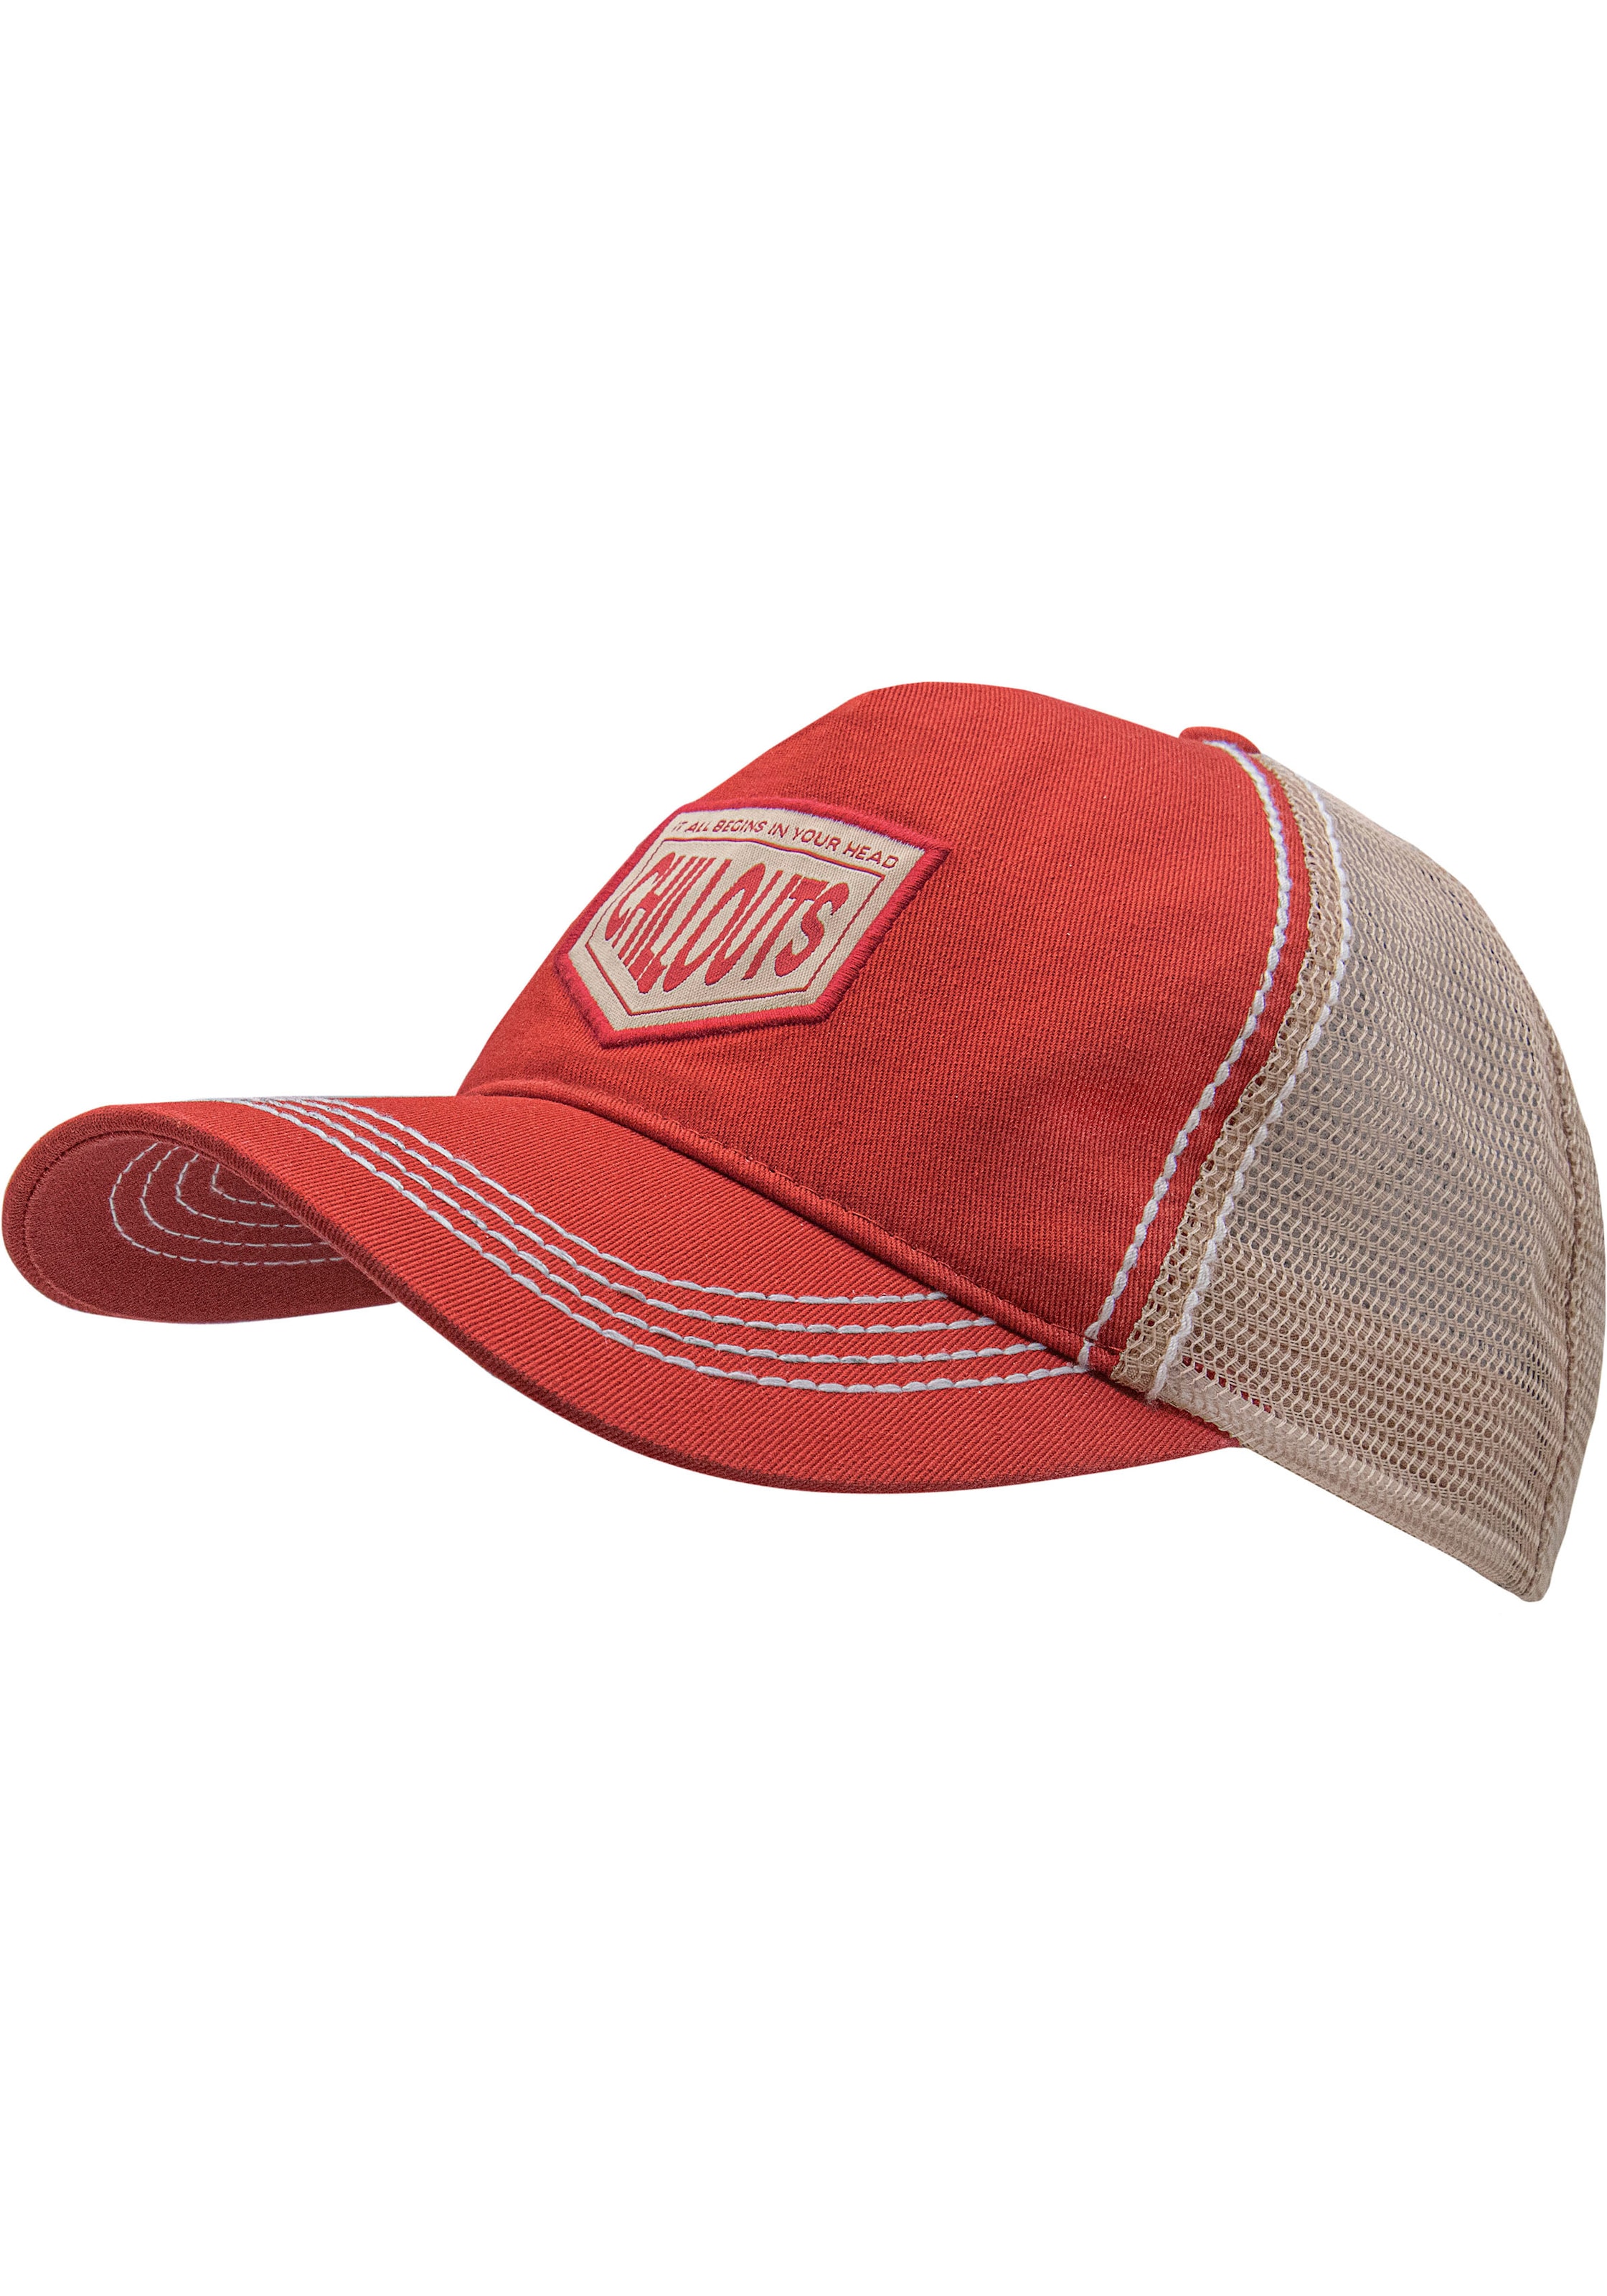 auf Rechnung | BAUR Portsmouth Baseball chillouts Hat Cap,